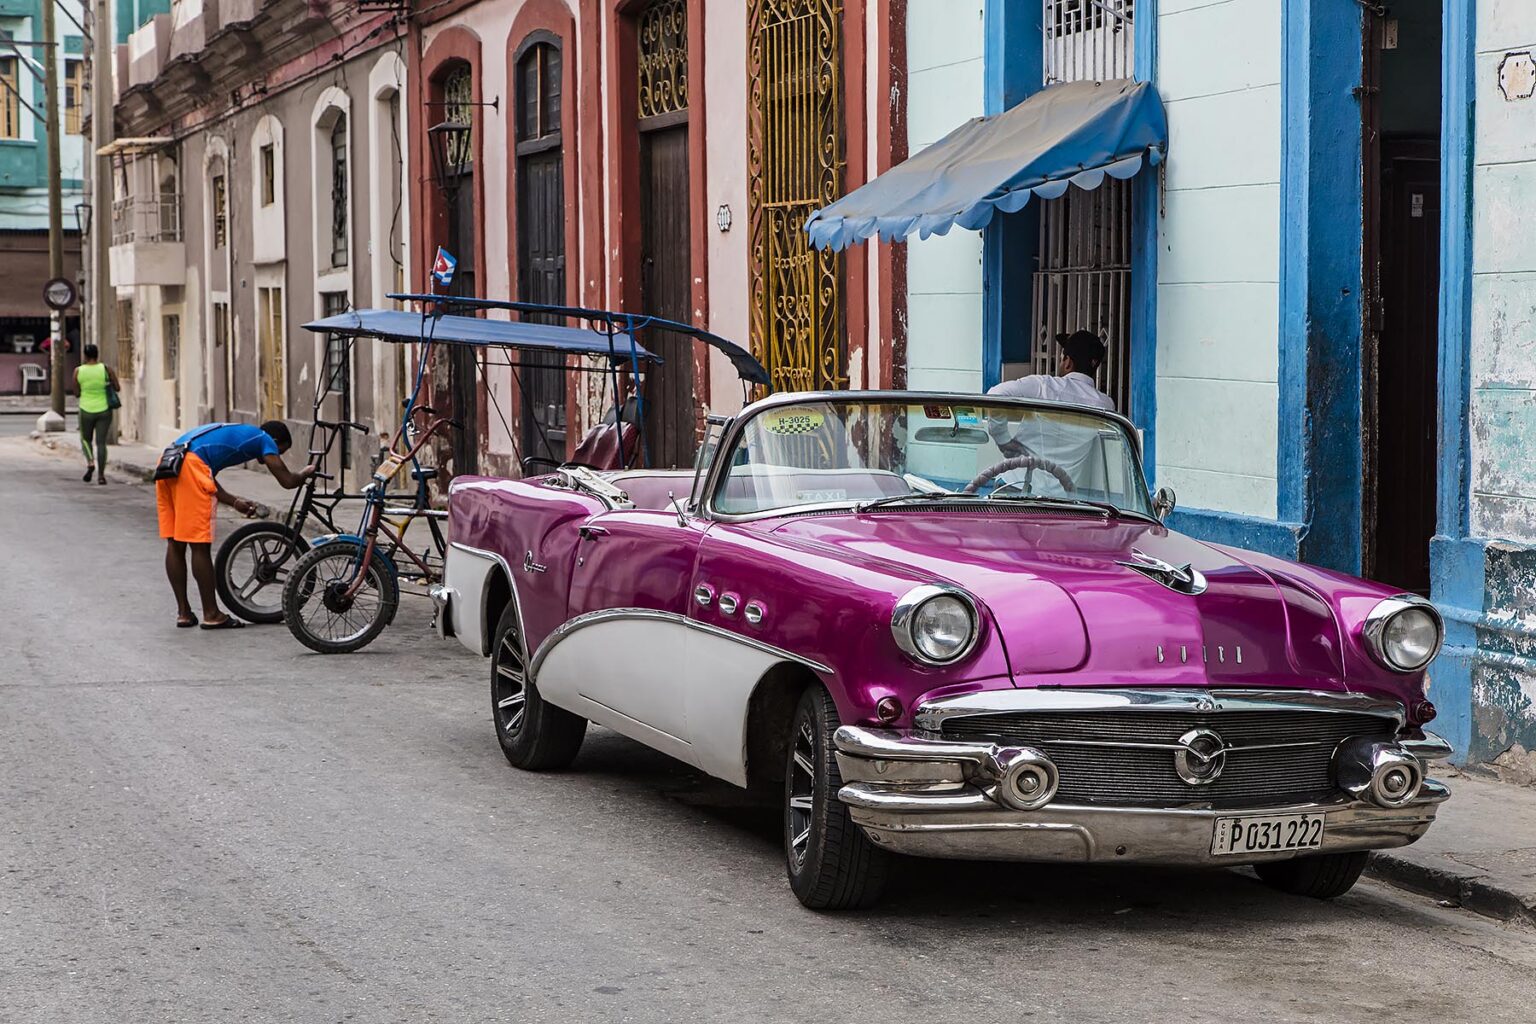 A Classic American cart outside the artist colony CALLEJON DE HAMEL started by SALVADOR GONZALES - HAVANA, CUBA